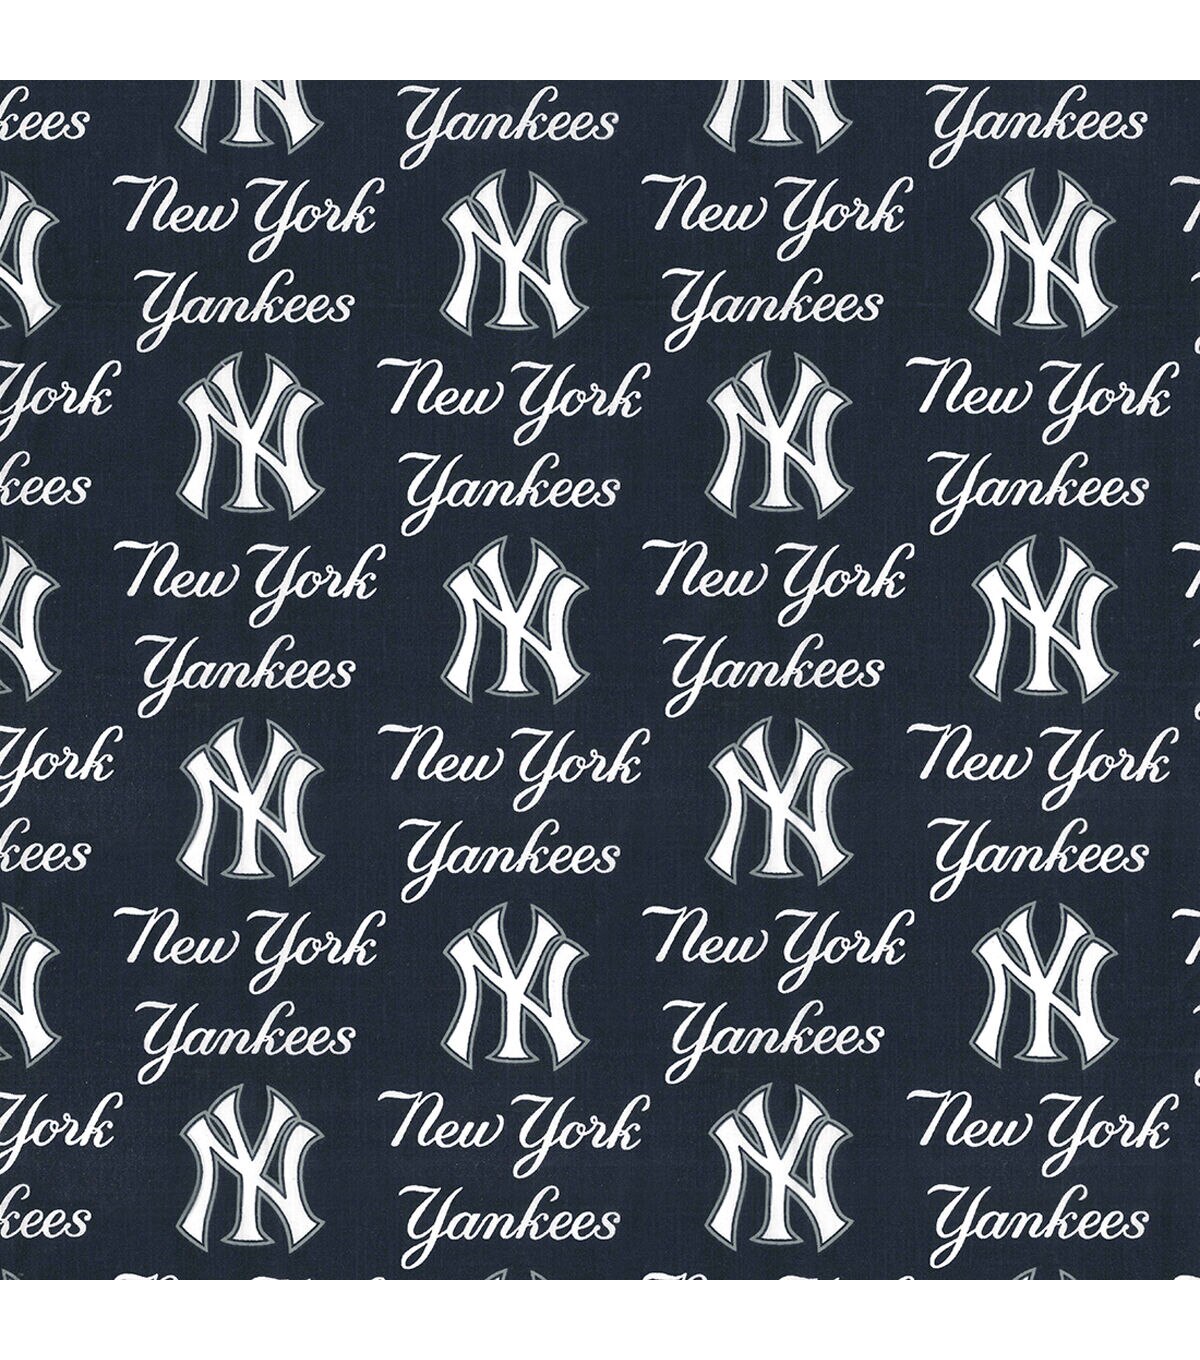 Northwest MLB New York Yankees Royal Plush Raschel Throw One Size  Multicolor 並行輸入品 【超ポイント祭?期間限定】